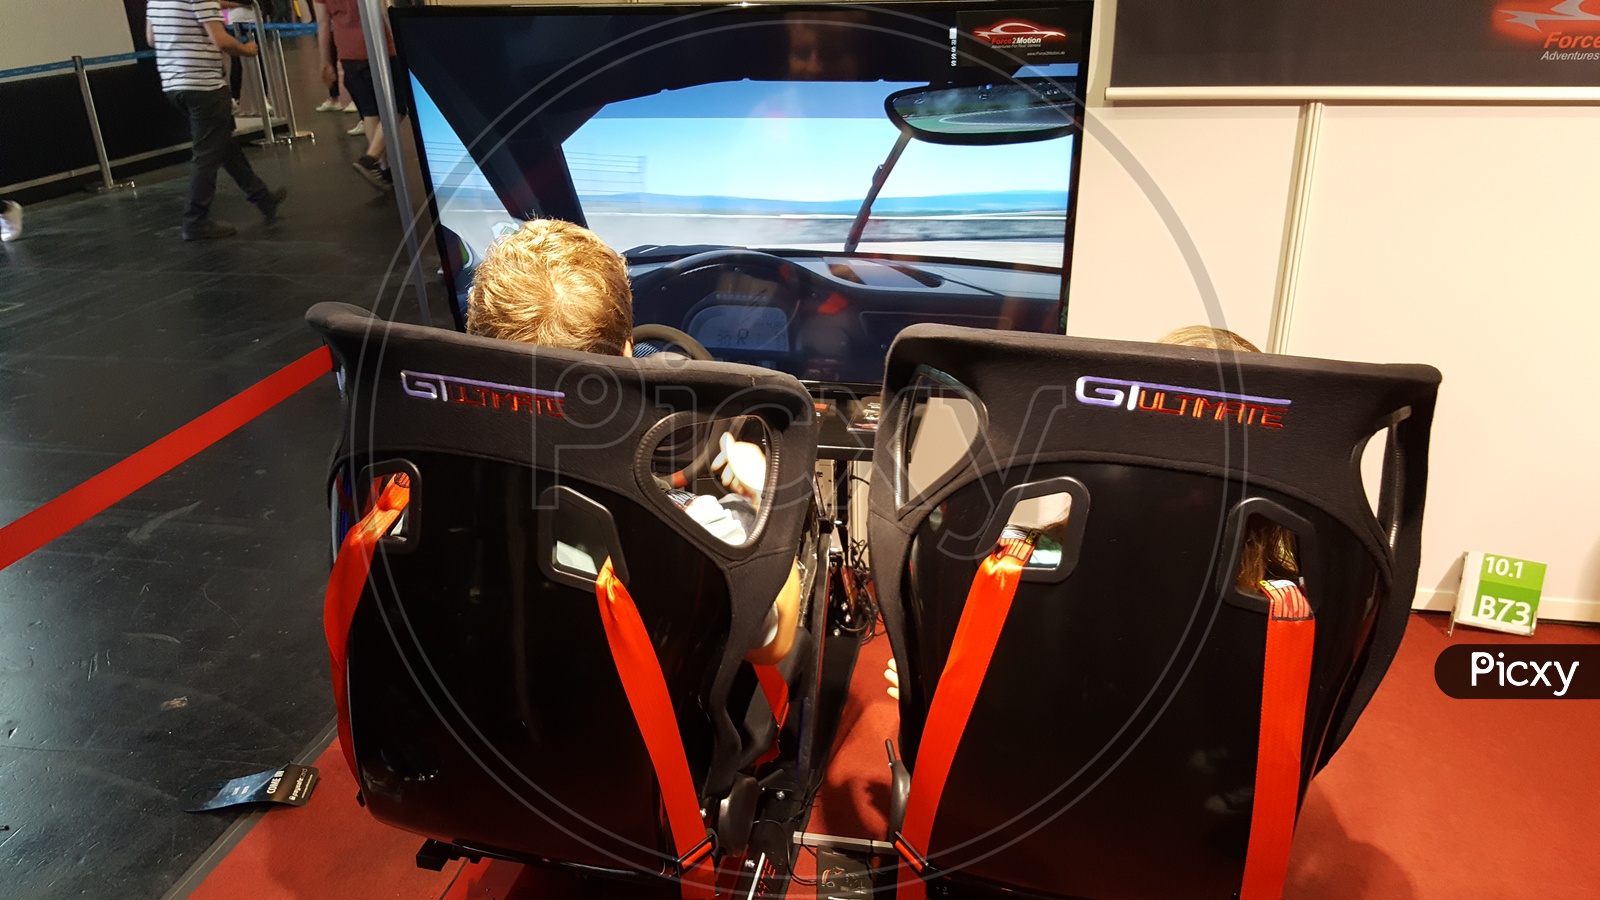 Gamer's using racing simulator for Playing Games